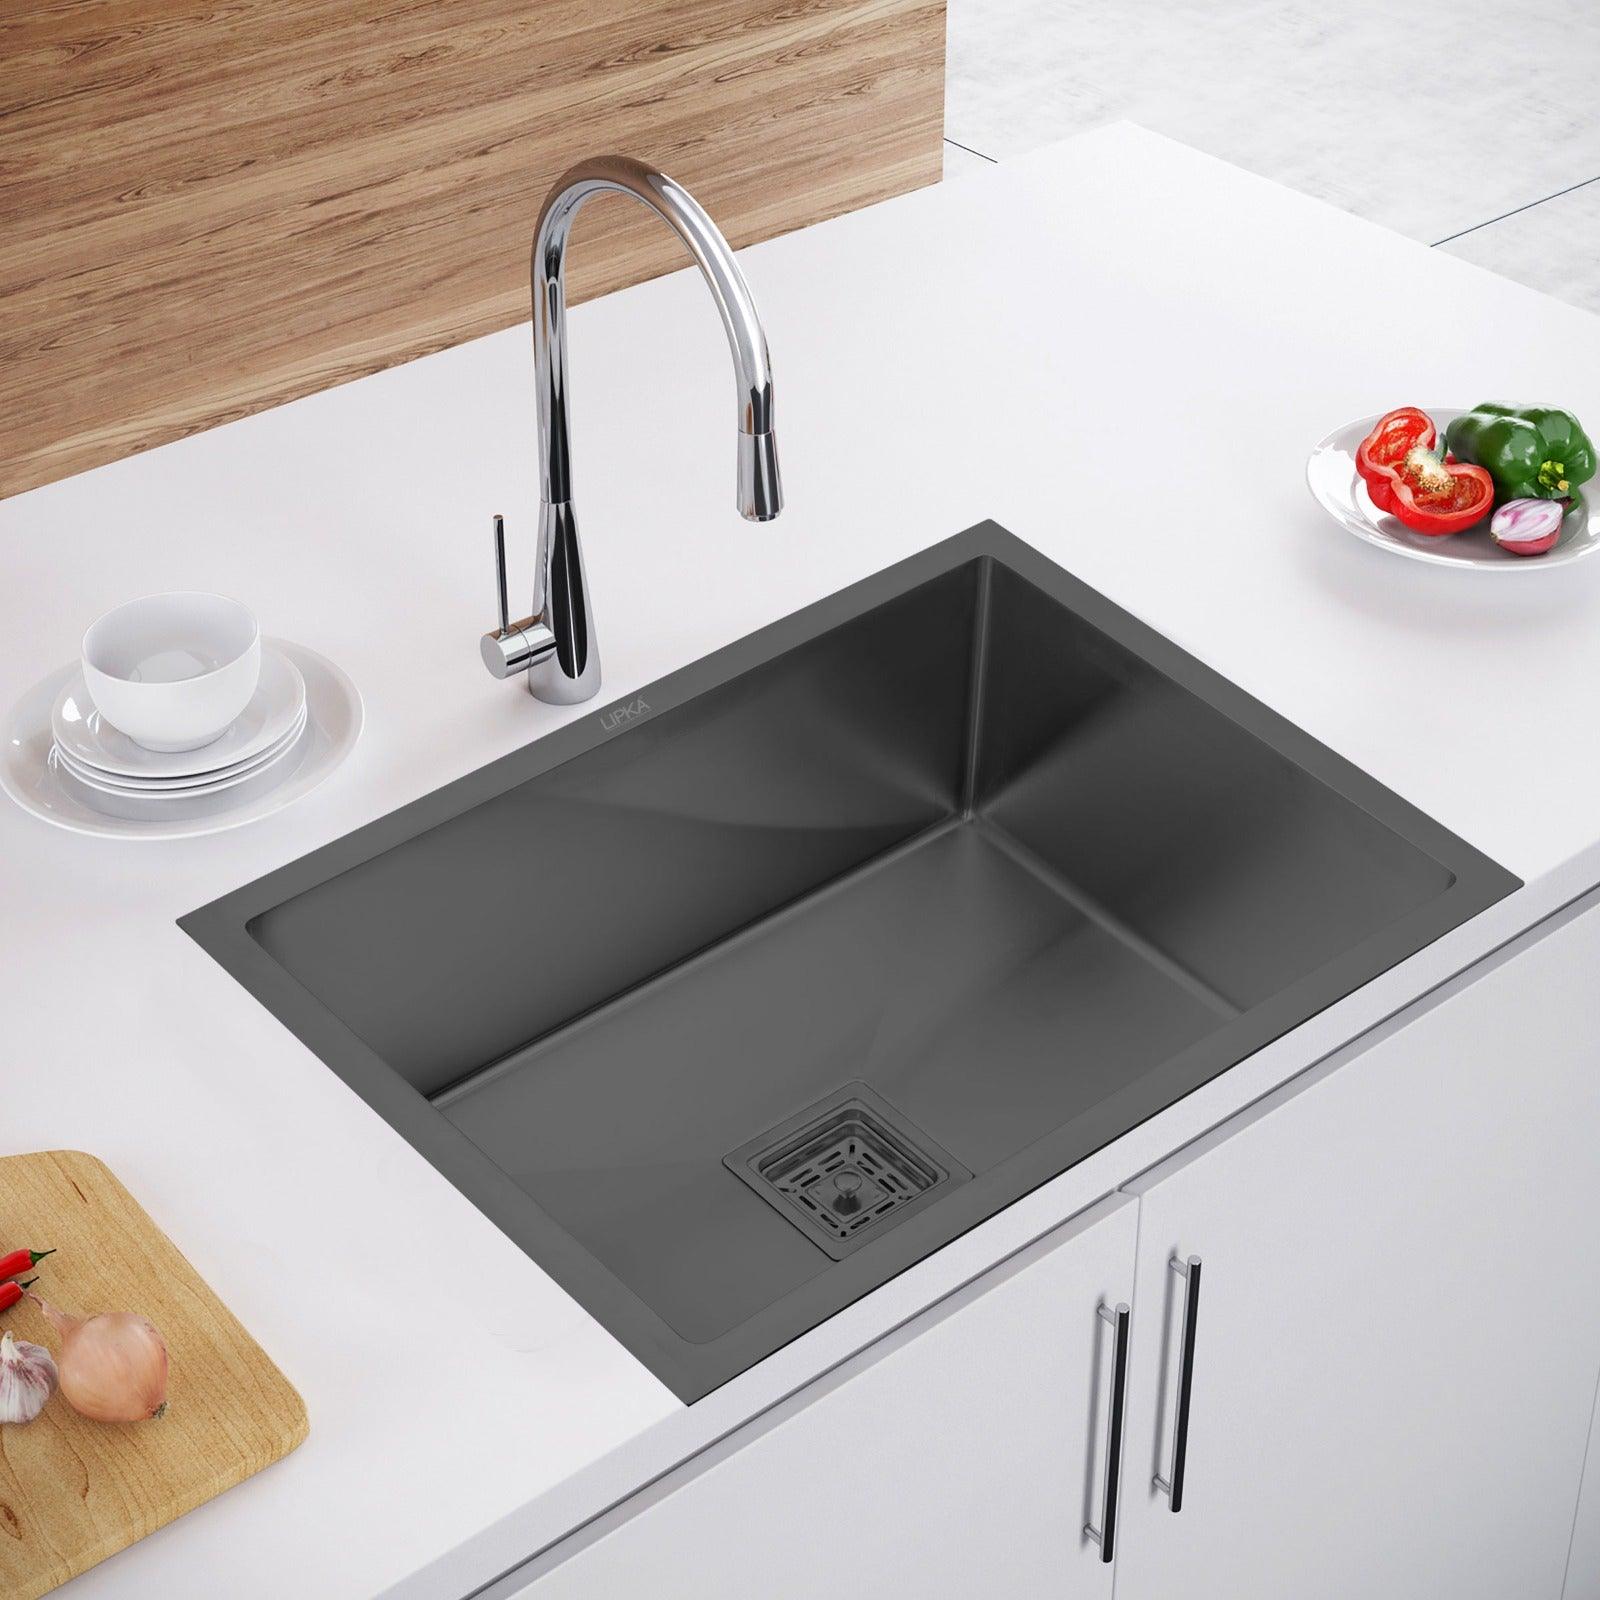 Handmade Black PVD Coated Single Bowl Kitchen Sink (24 x 18 x 10 Inches) - LIPKA